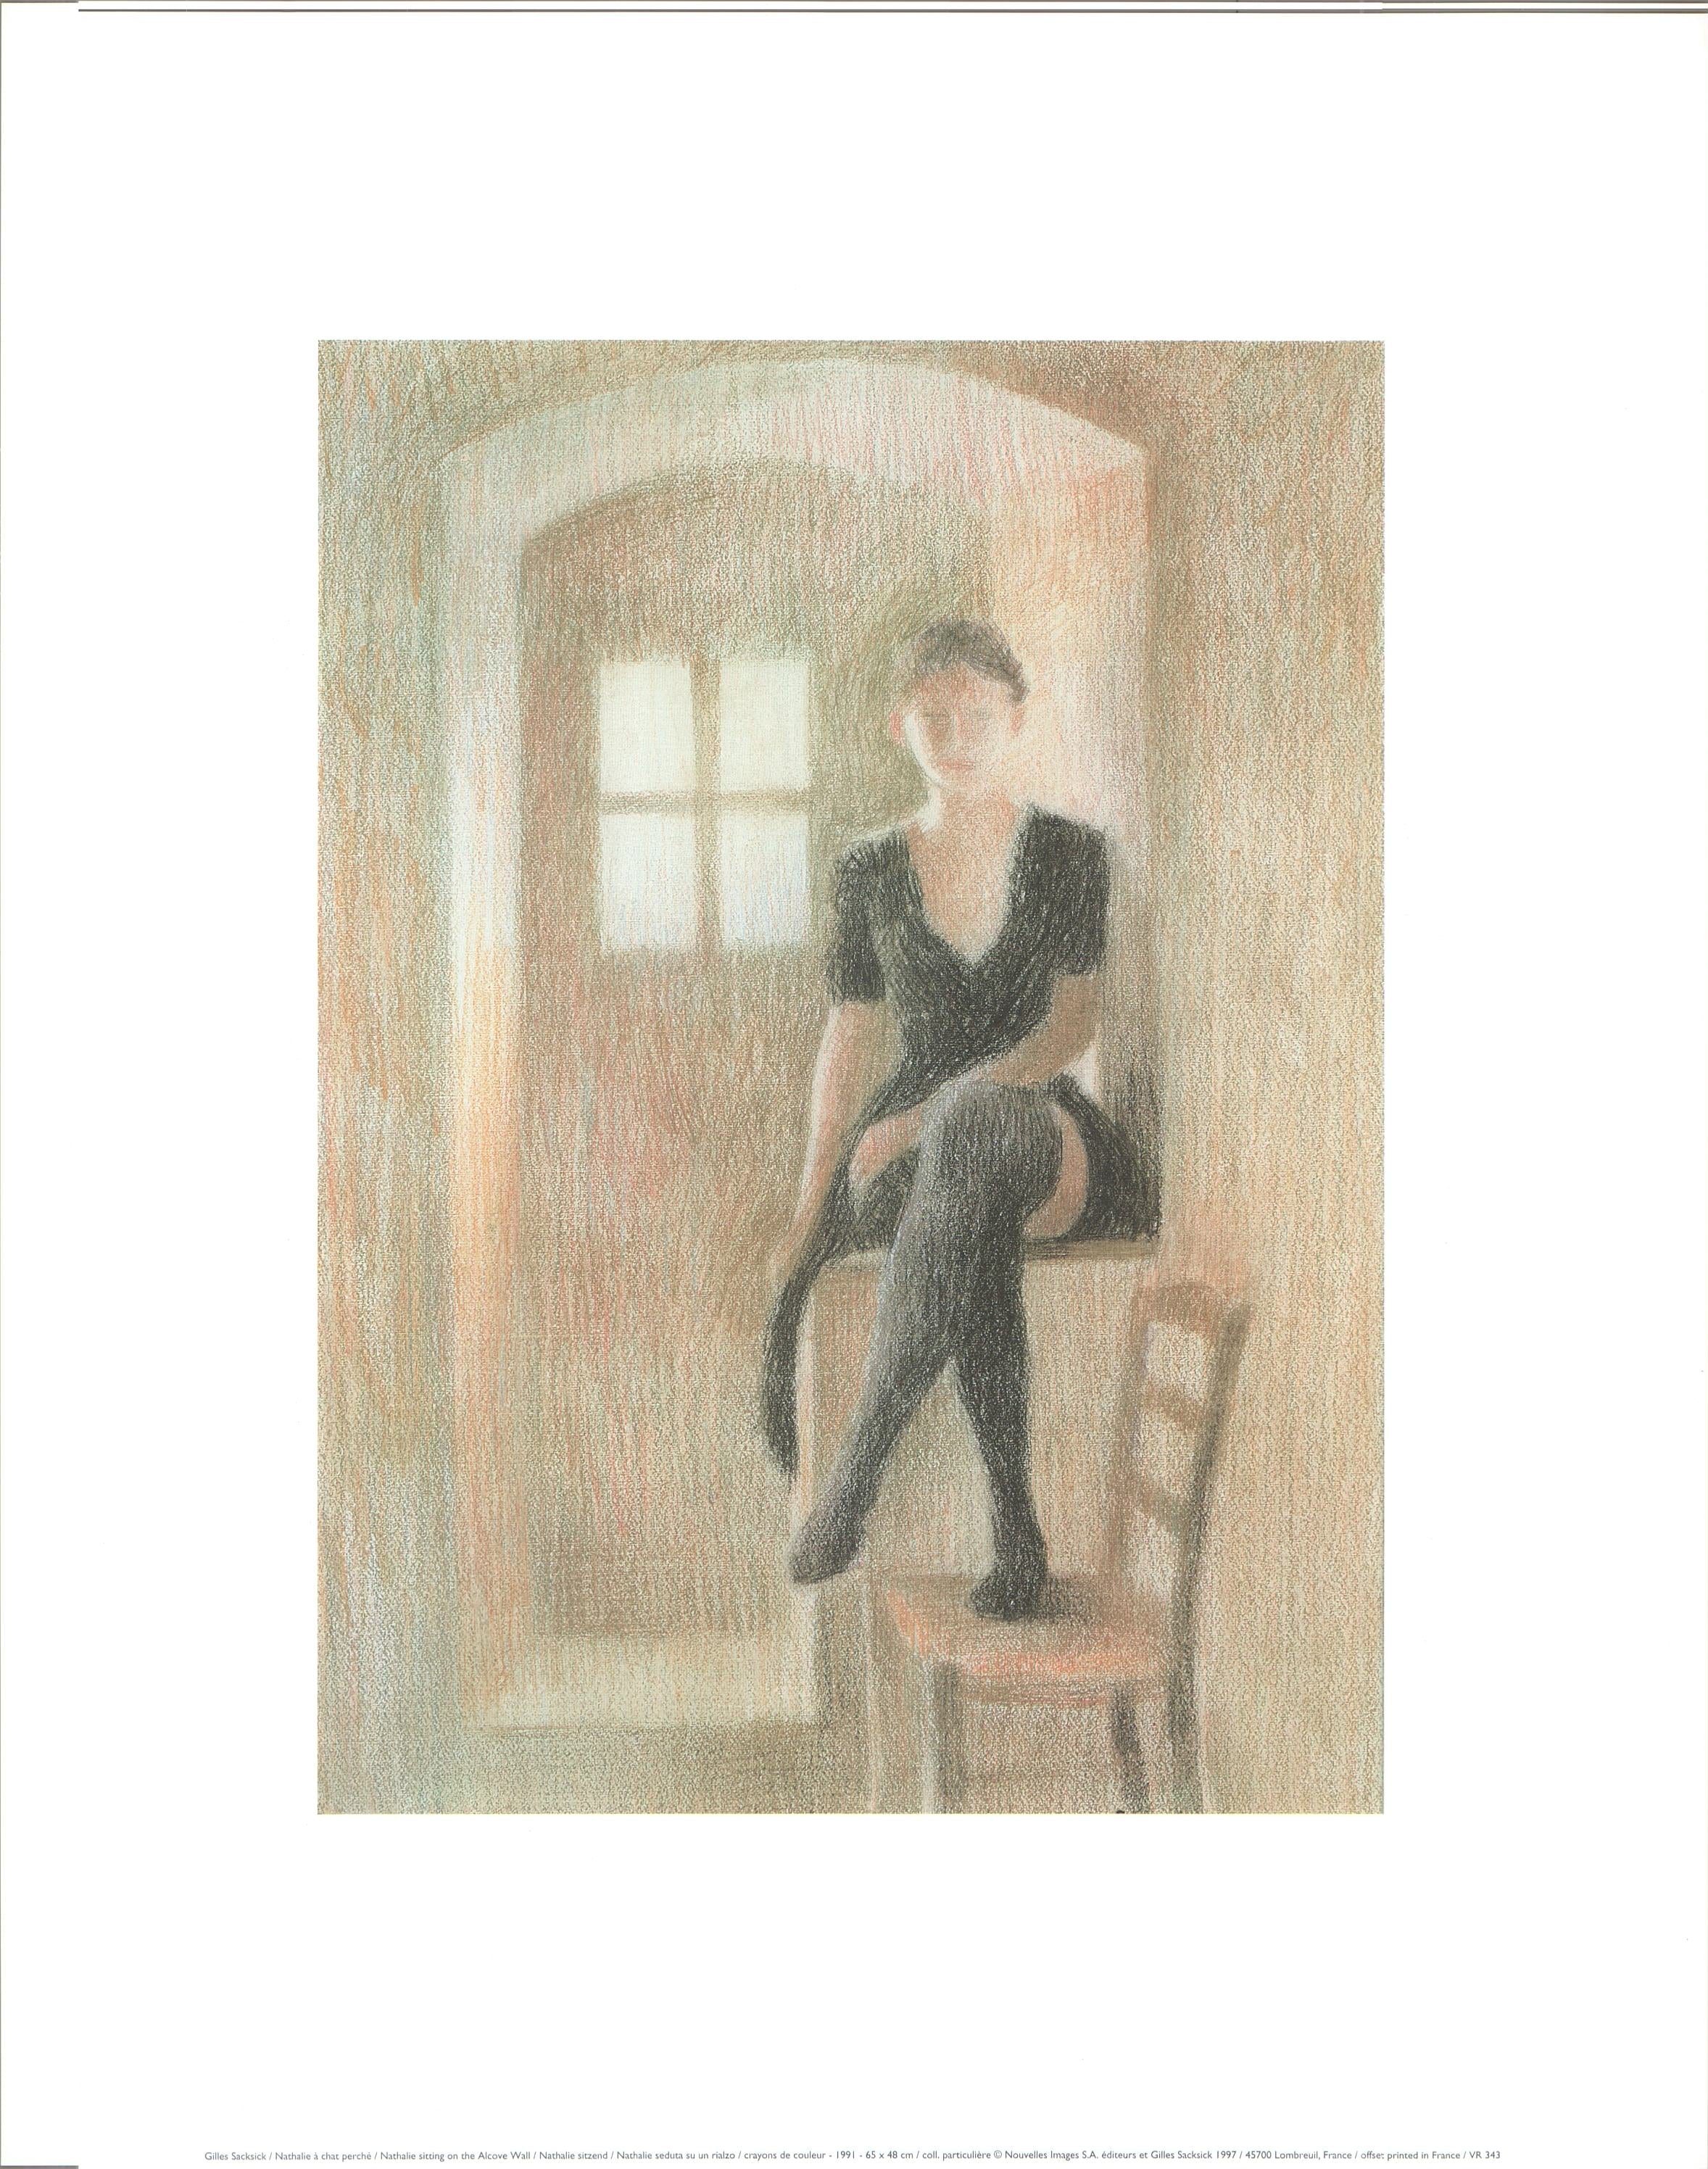 Nathalie Chat Perche, 1991 by Gilles Sacksick - 16 X 20'' (Art